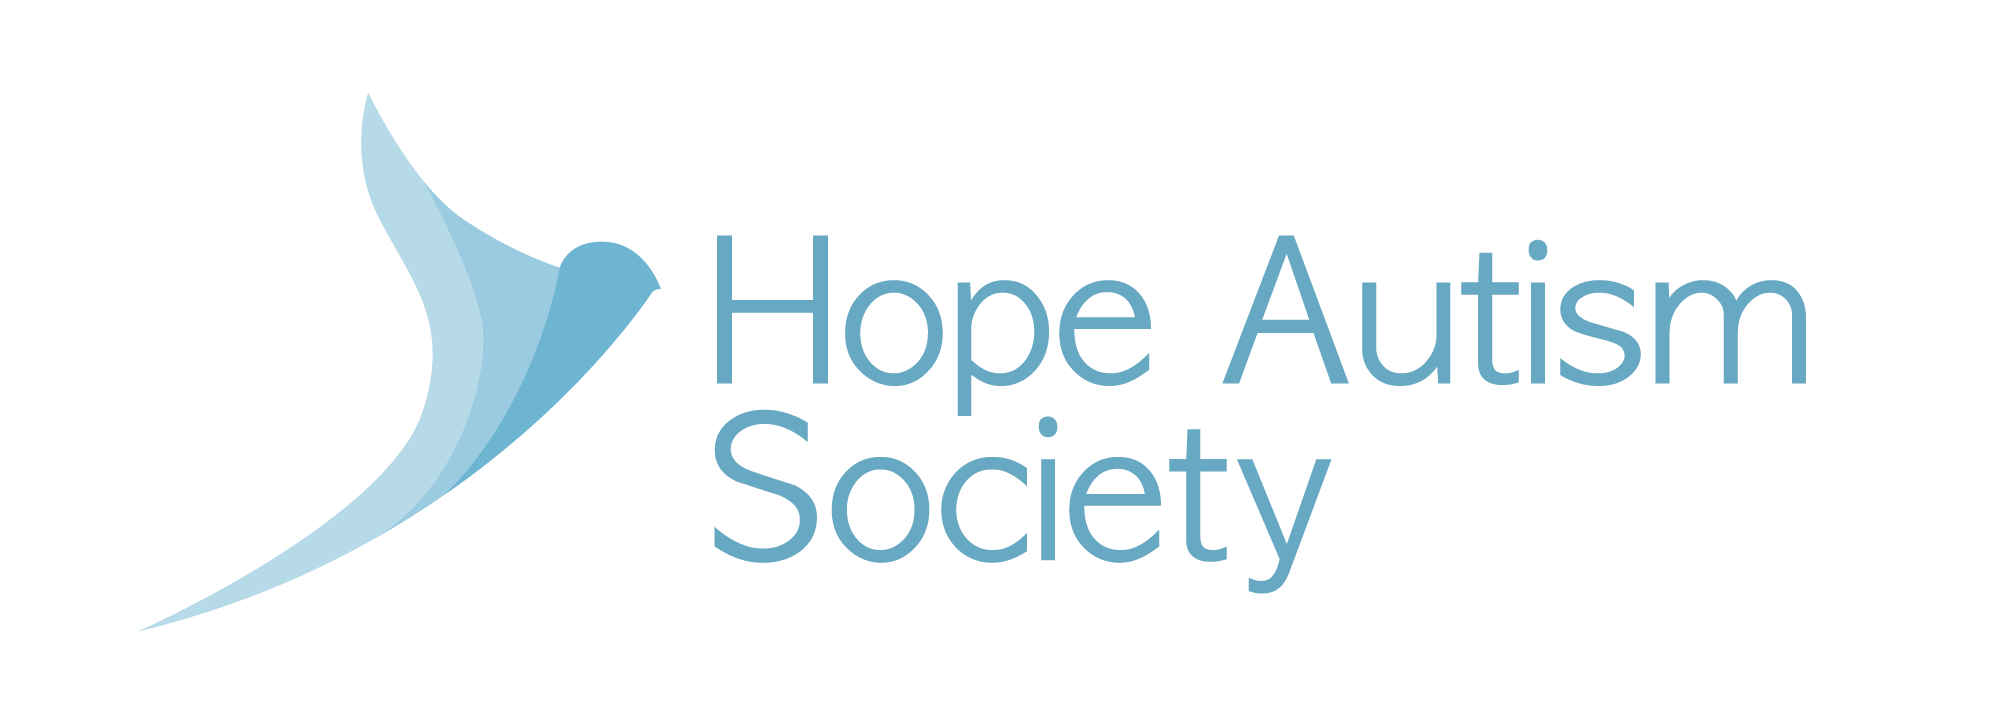 Hope Autism Society 